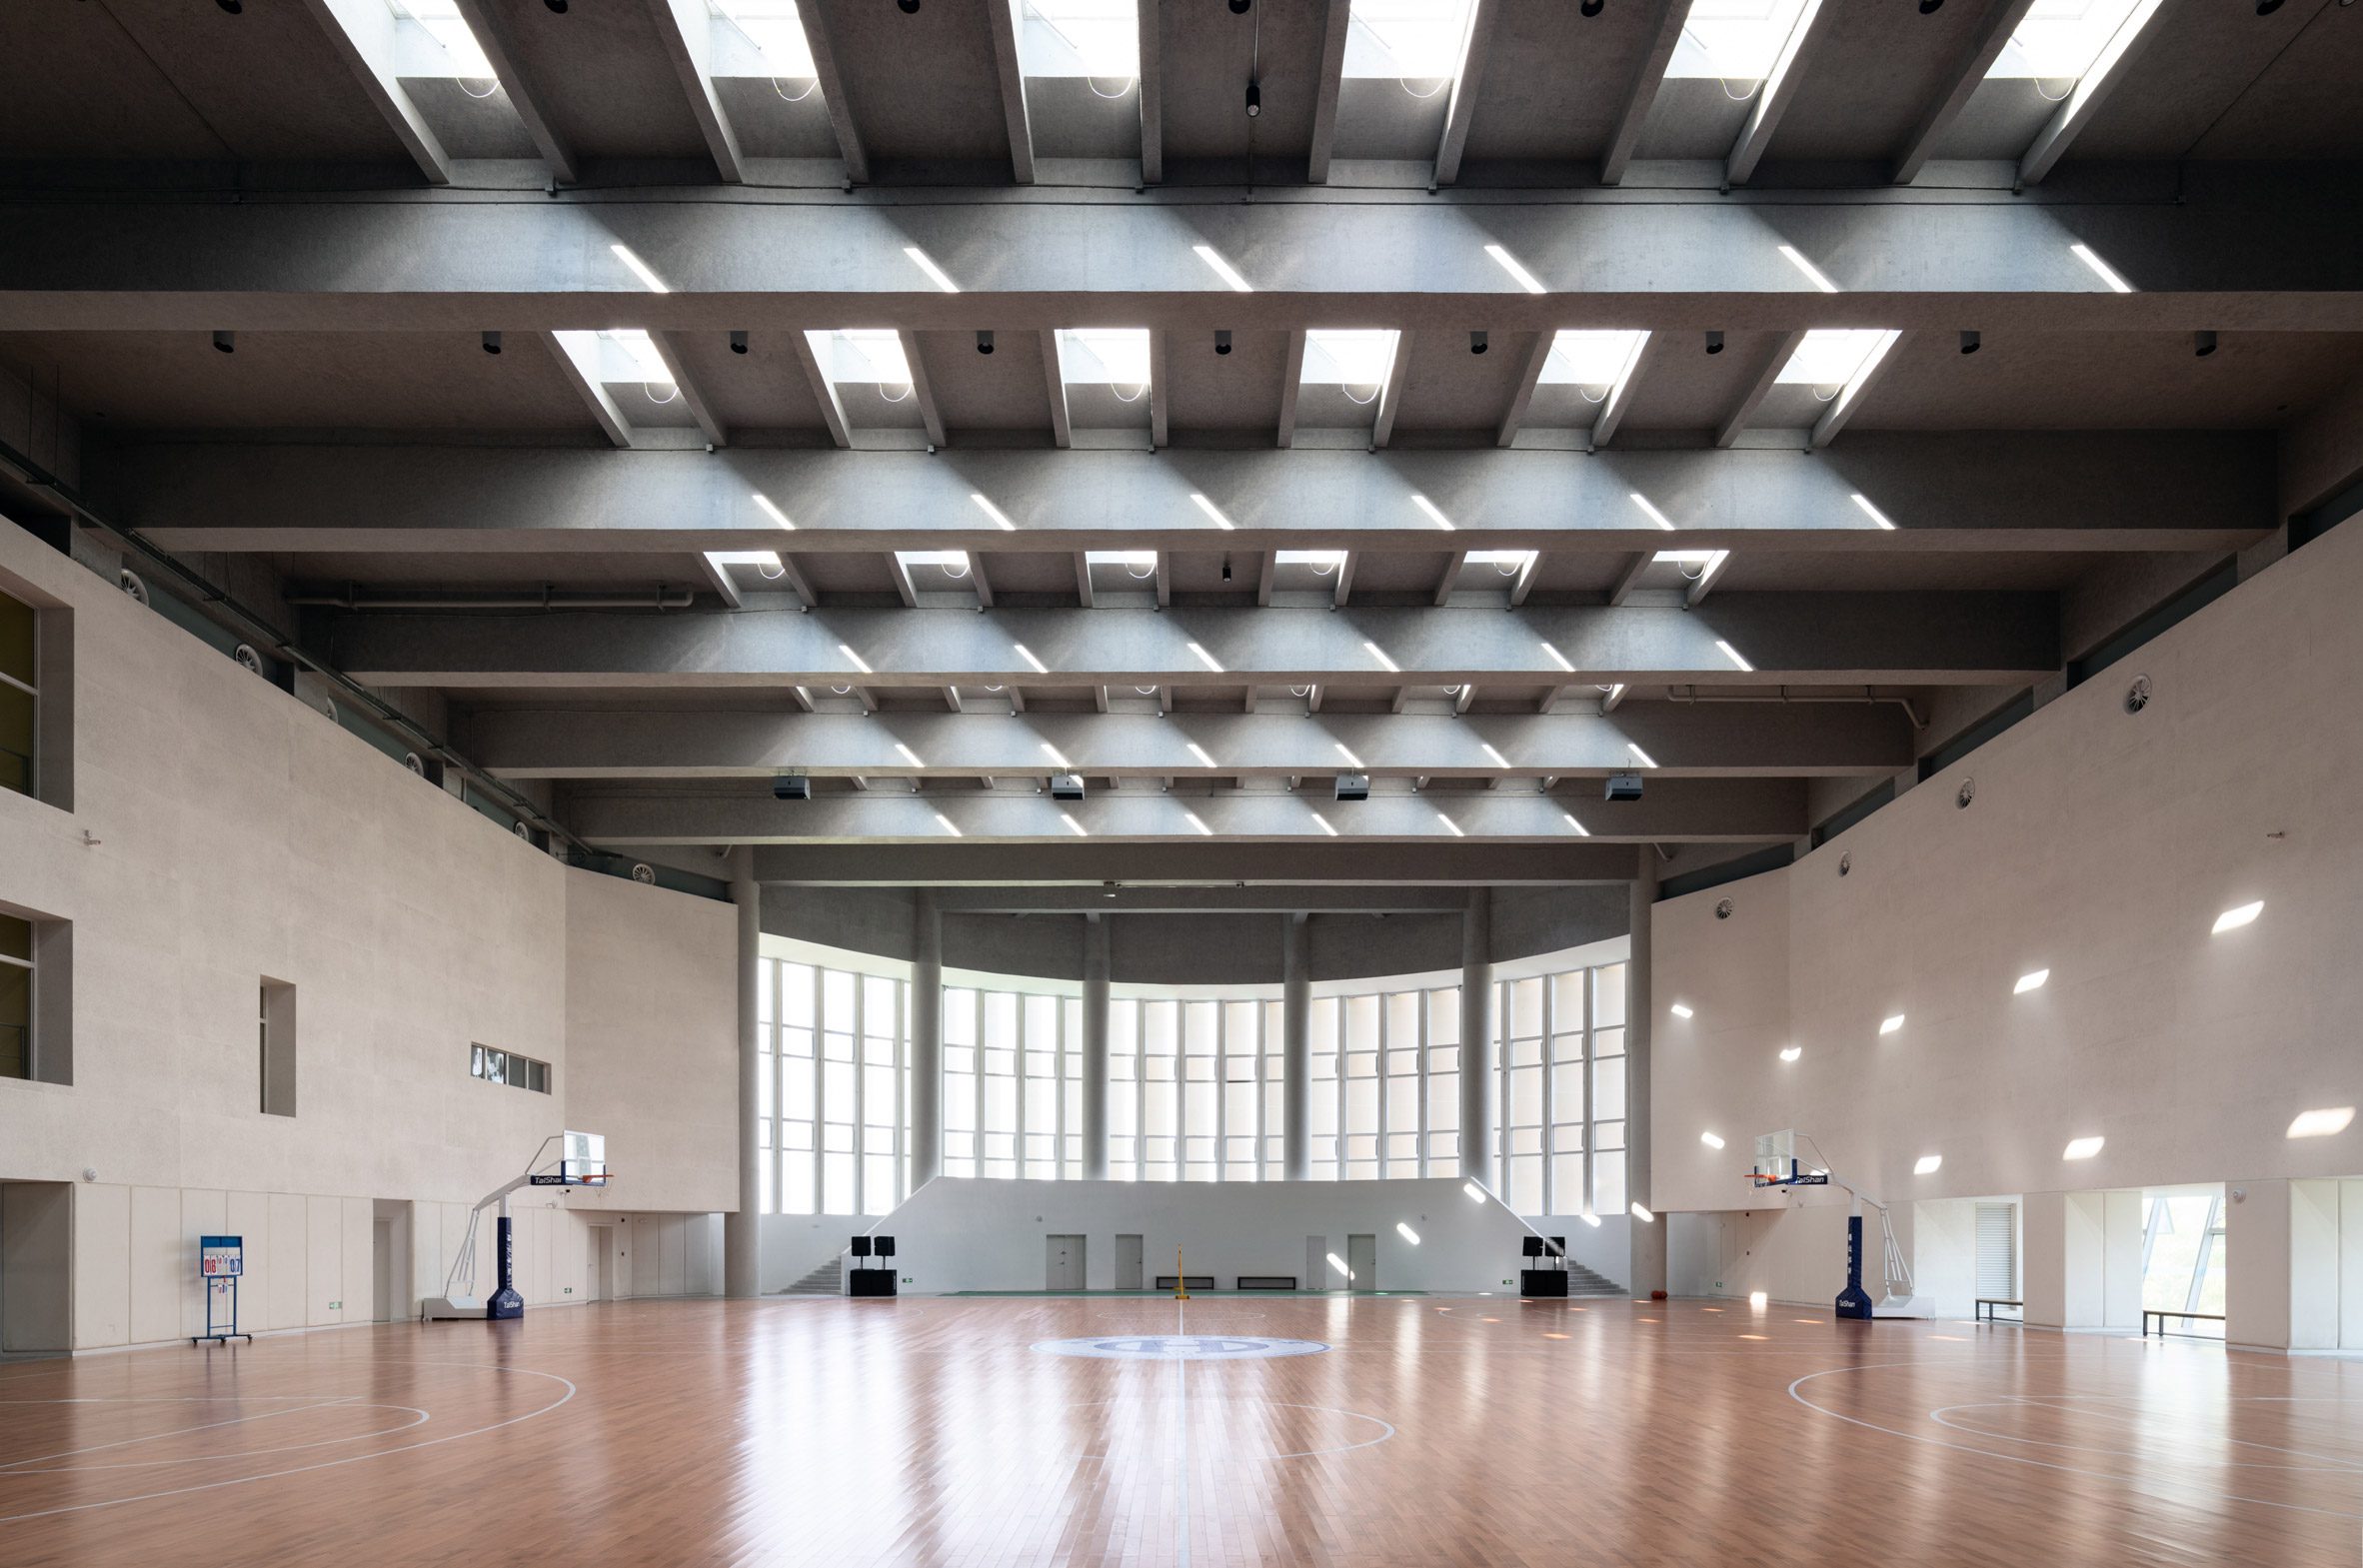 Triple-height gymnasium with skylights